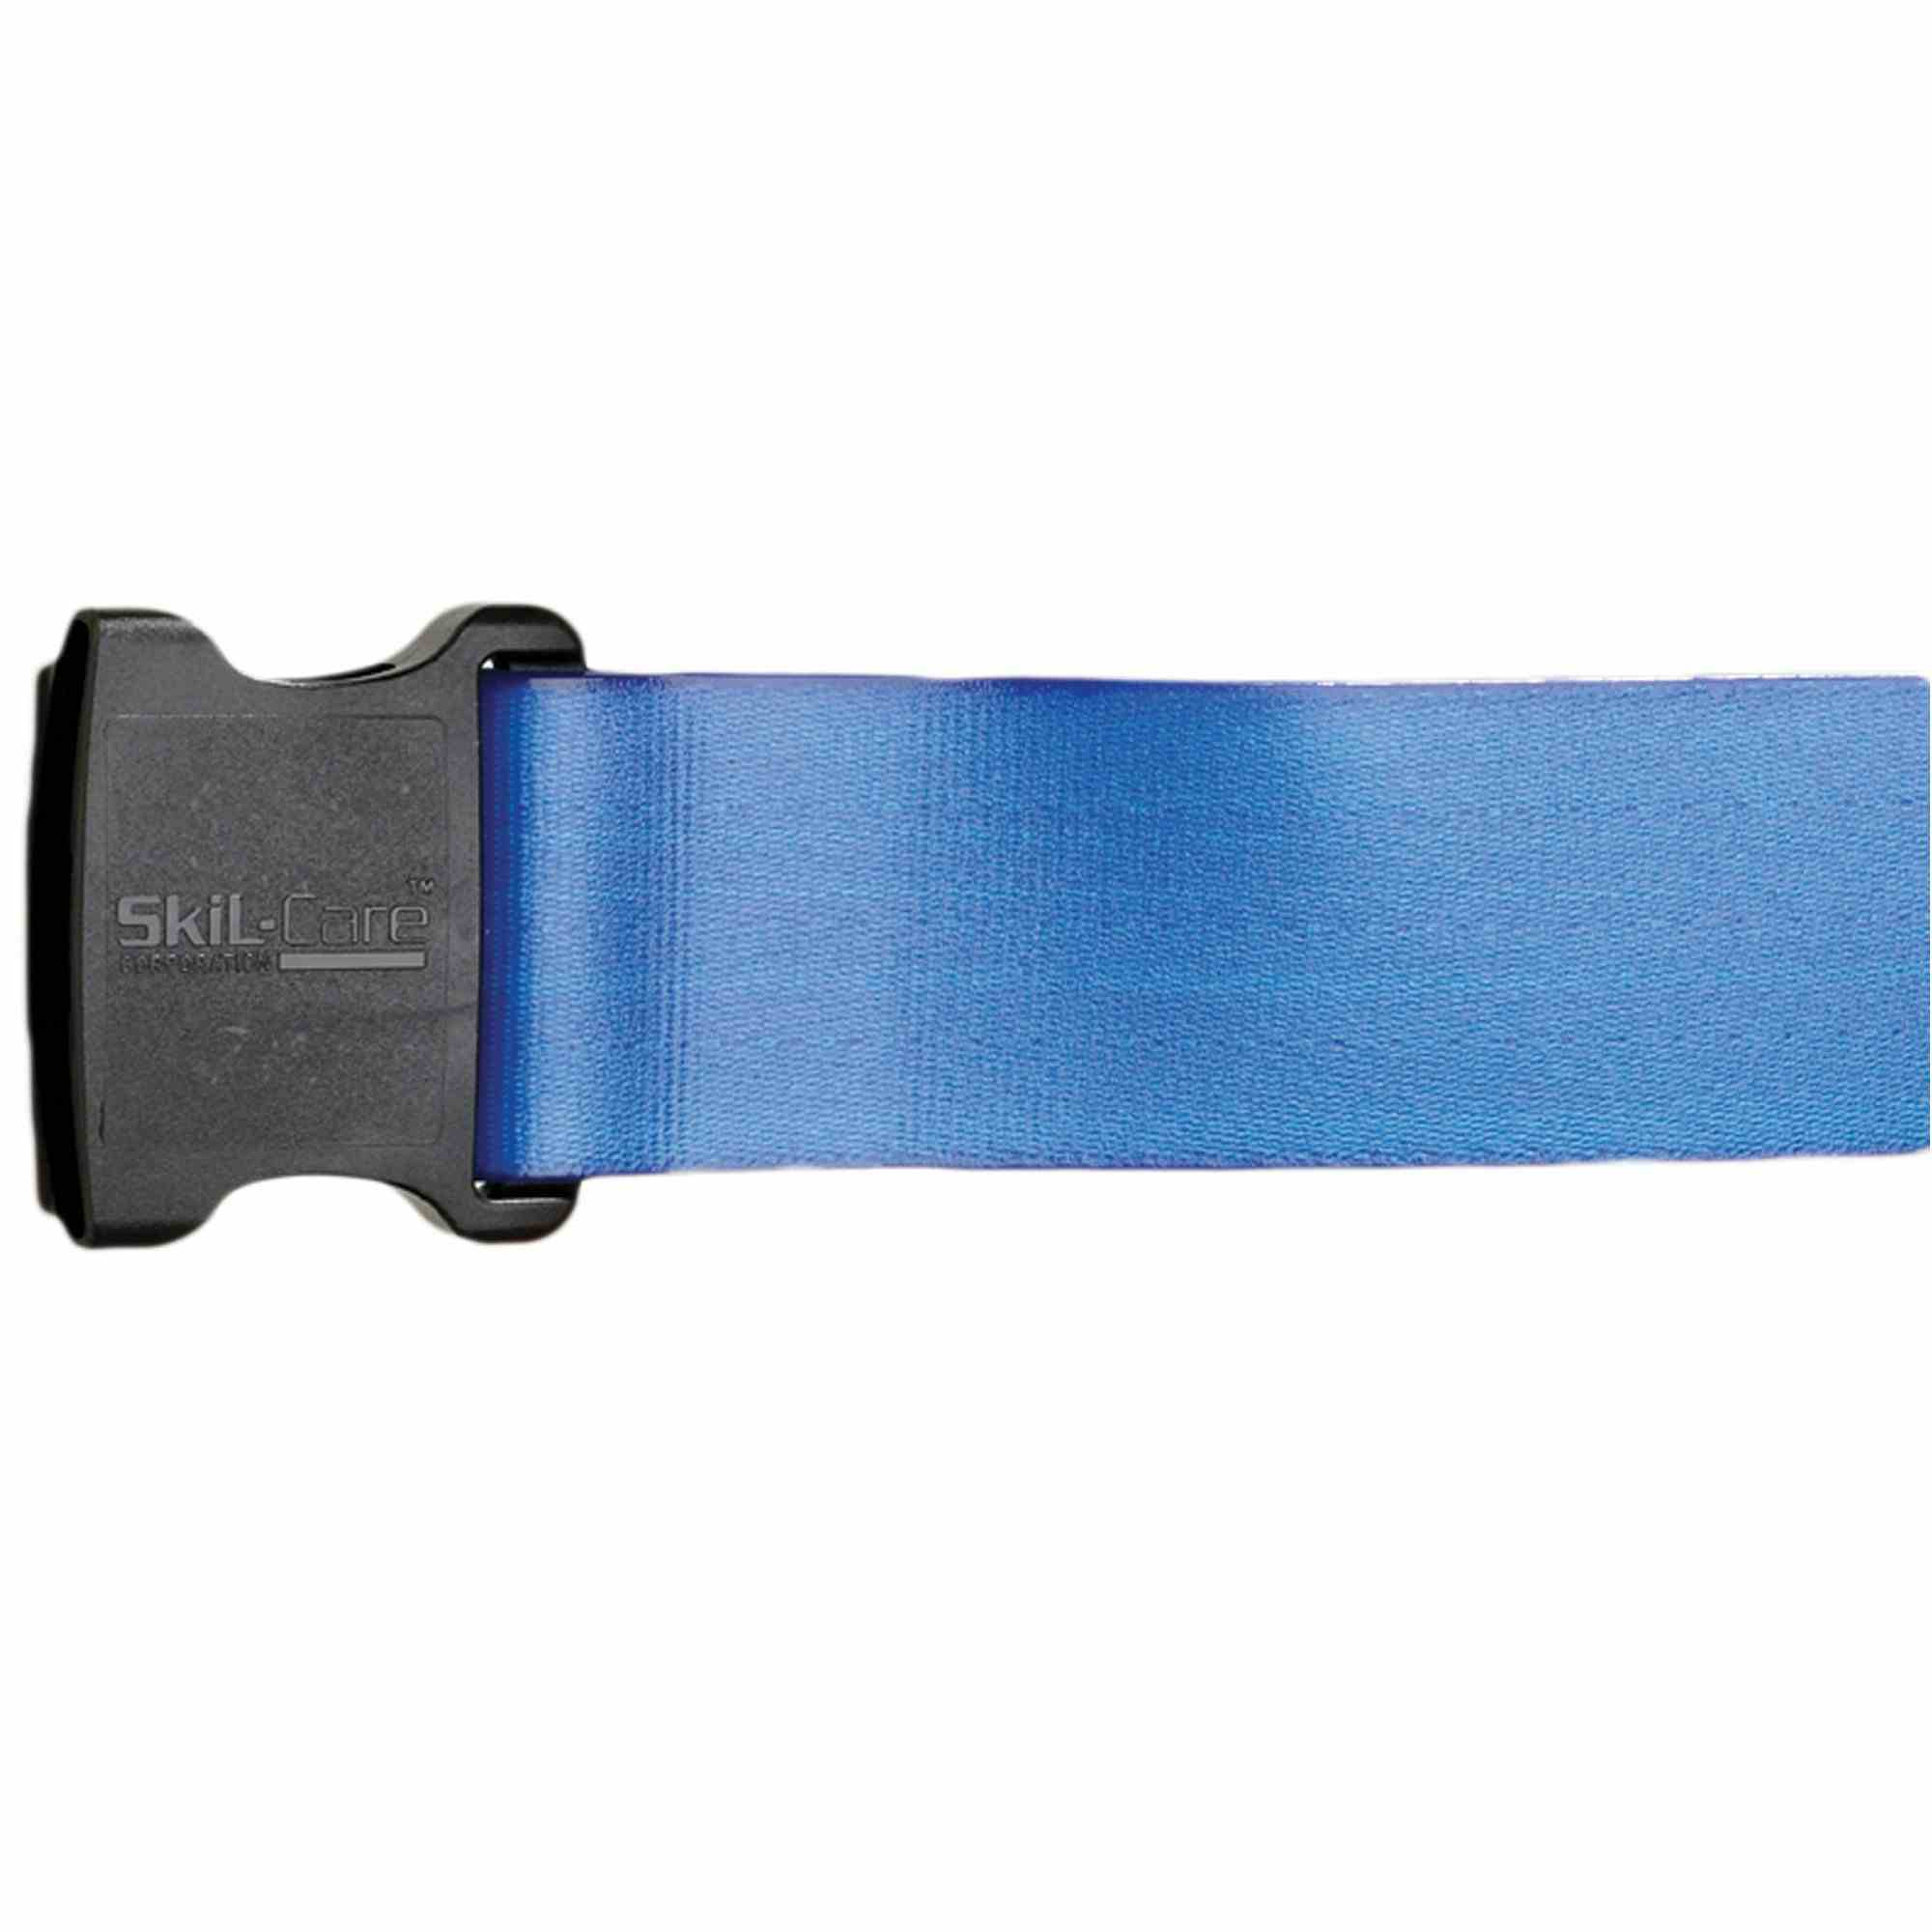 SkiL-Care Vinyl Gait Belt, Multiple Colors, 914380, 60 Inch - Blue